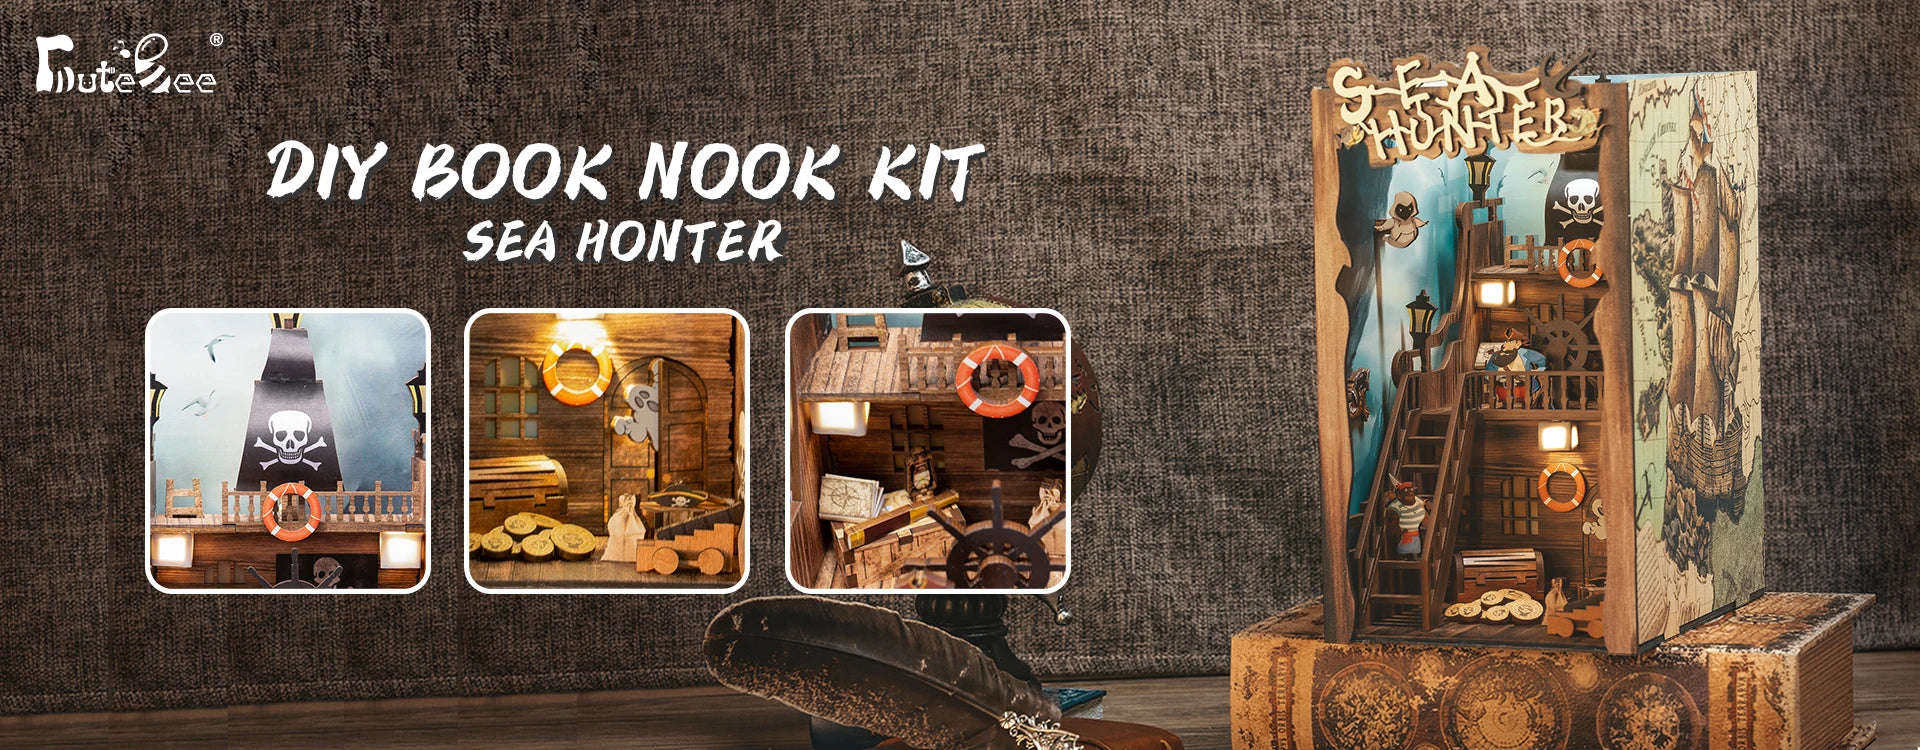 Cutebee Sea Hunter YS04 DIY Book Nook Kit